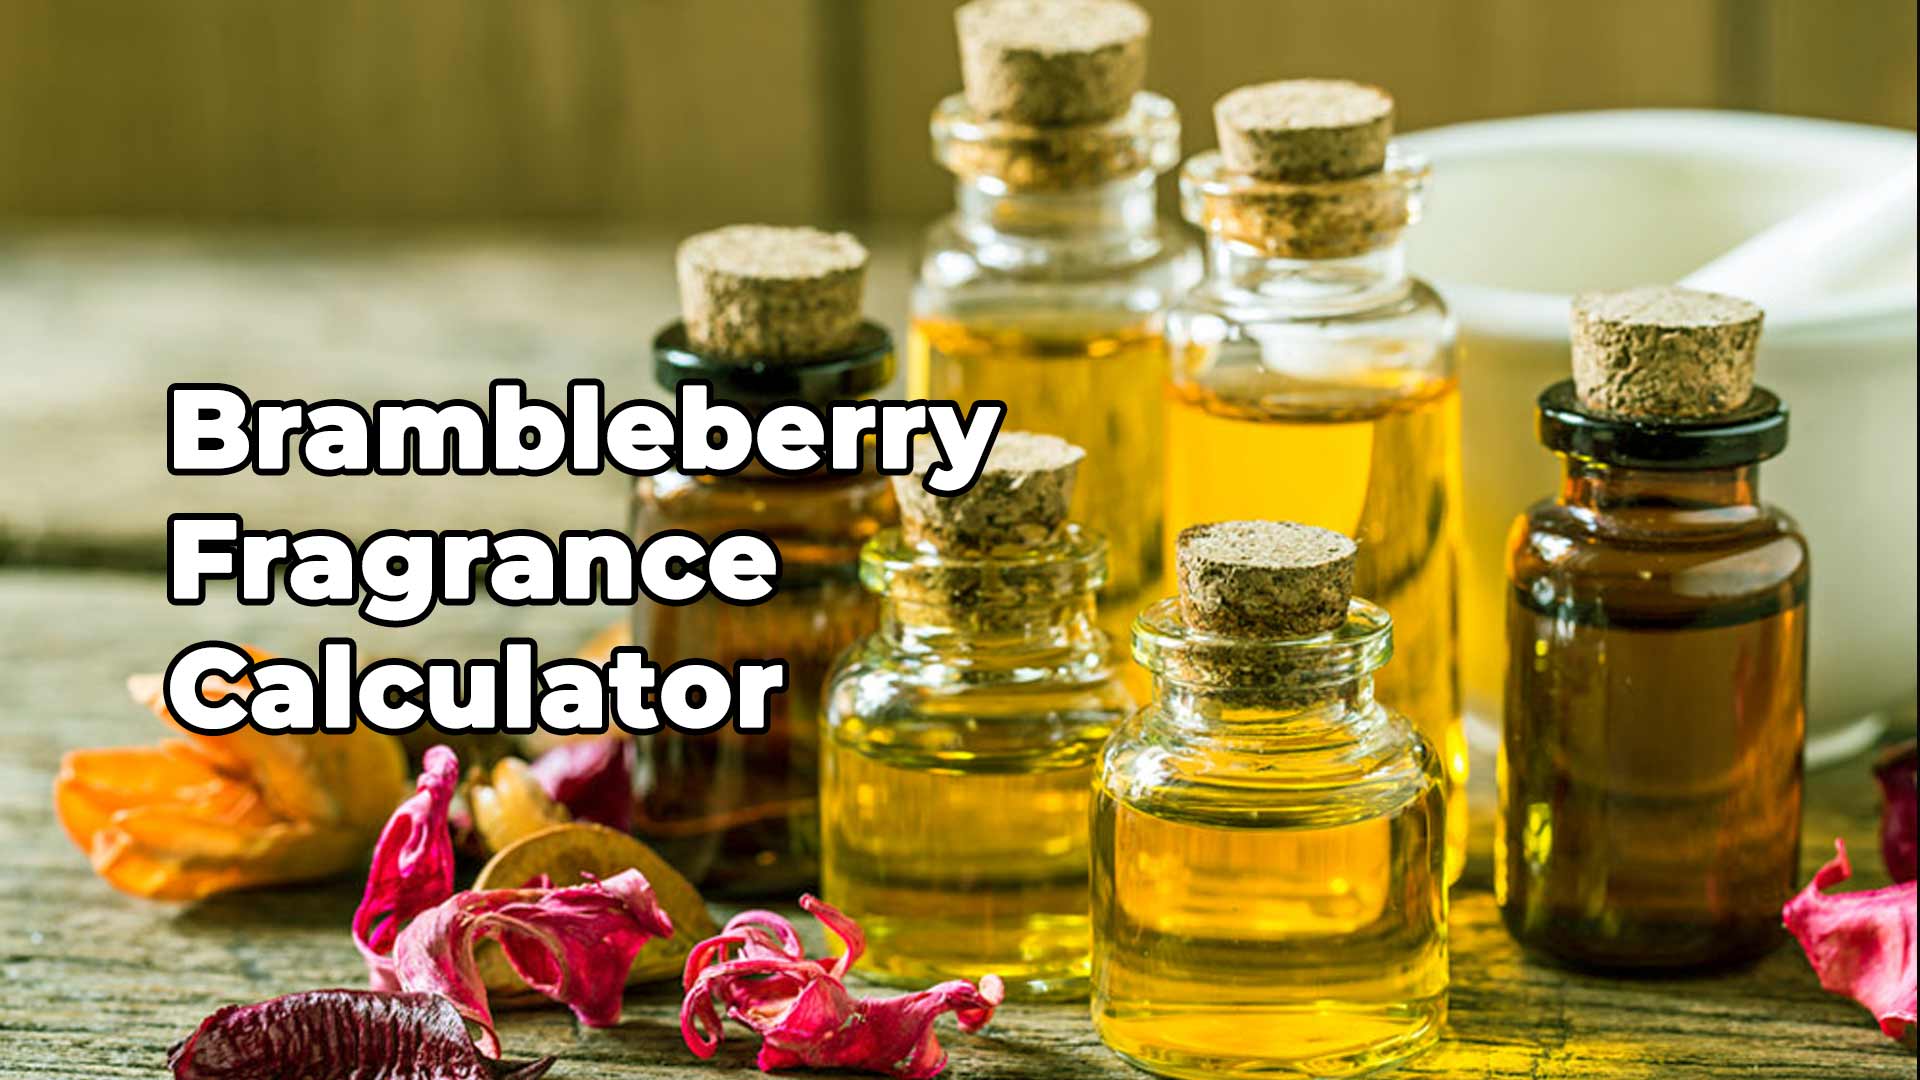 Brambleberry Fragrance Calculator